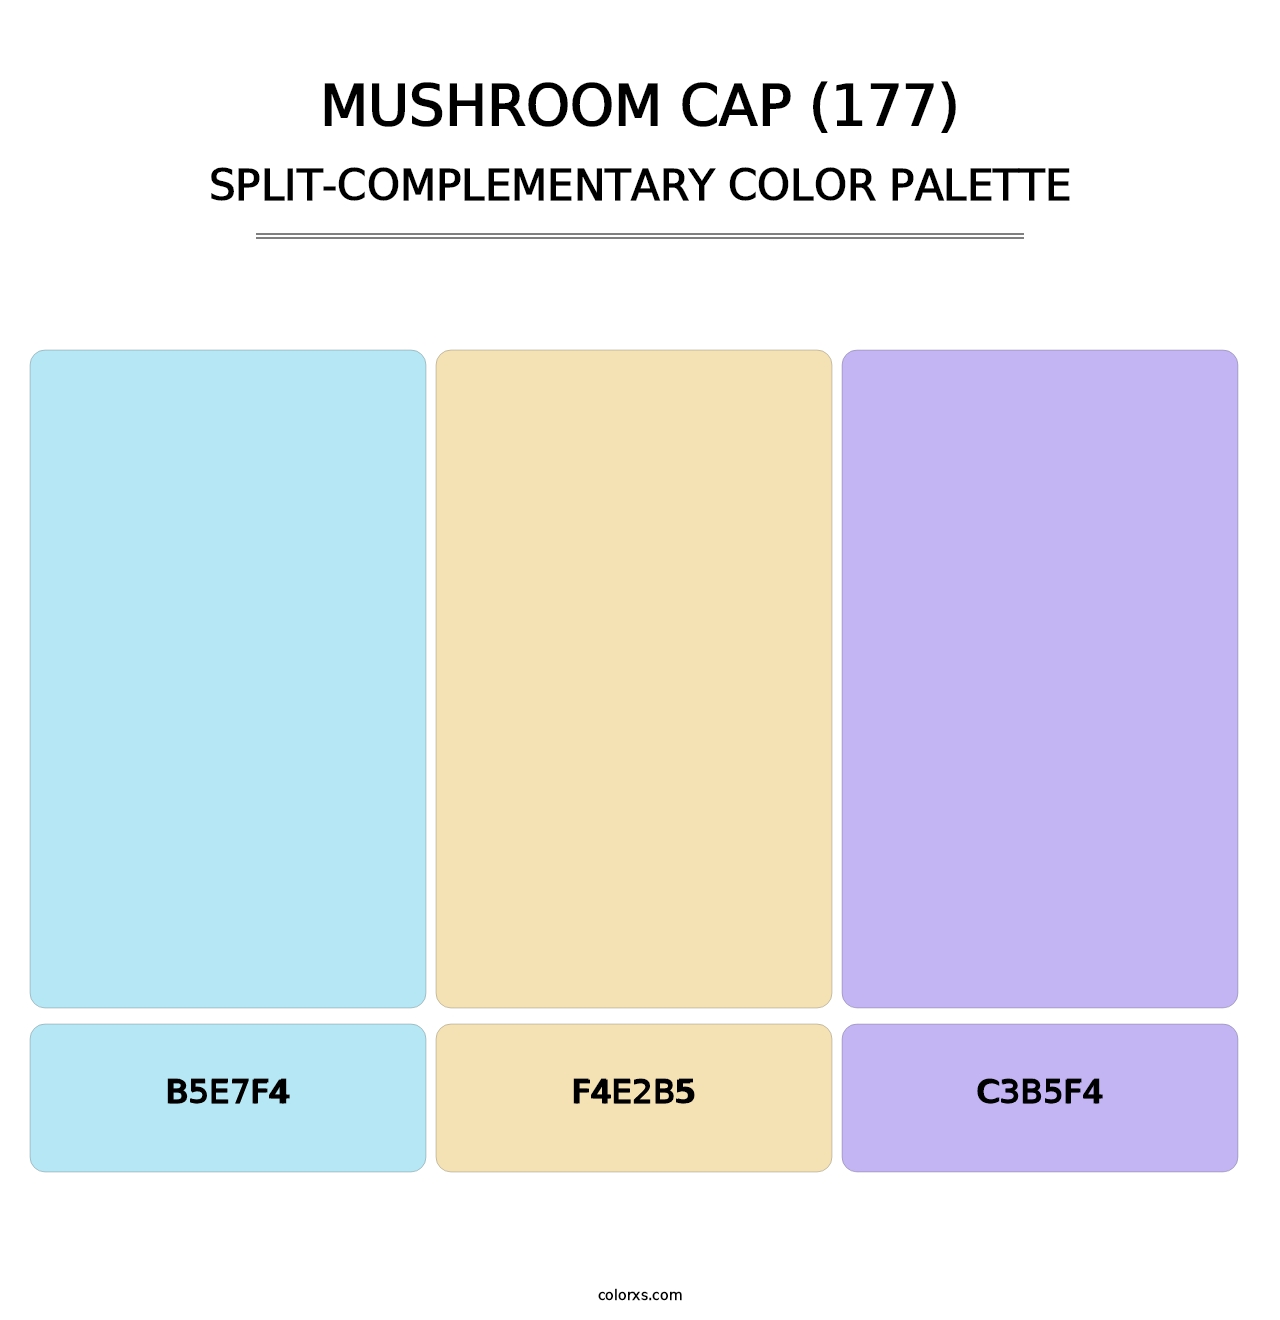 Mushroom Cap (177) - Split-Complementary Color Palette